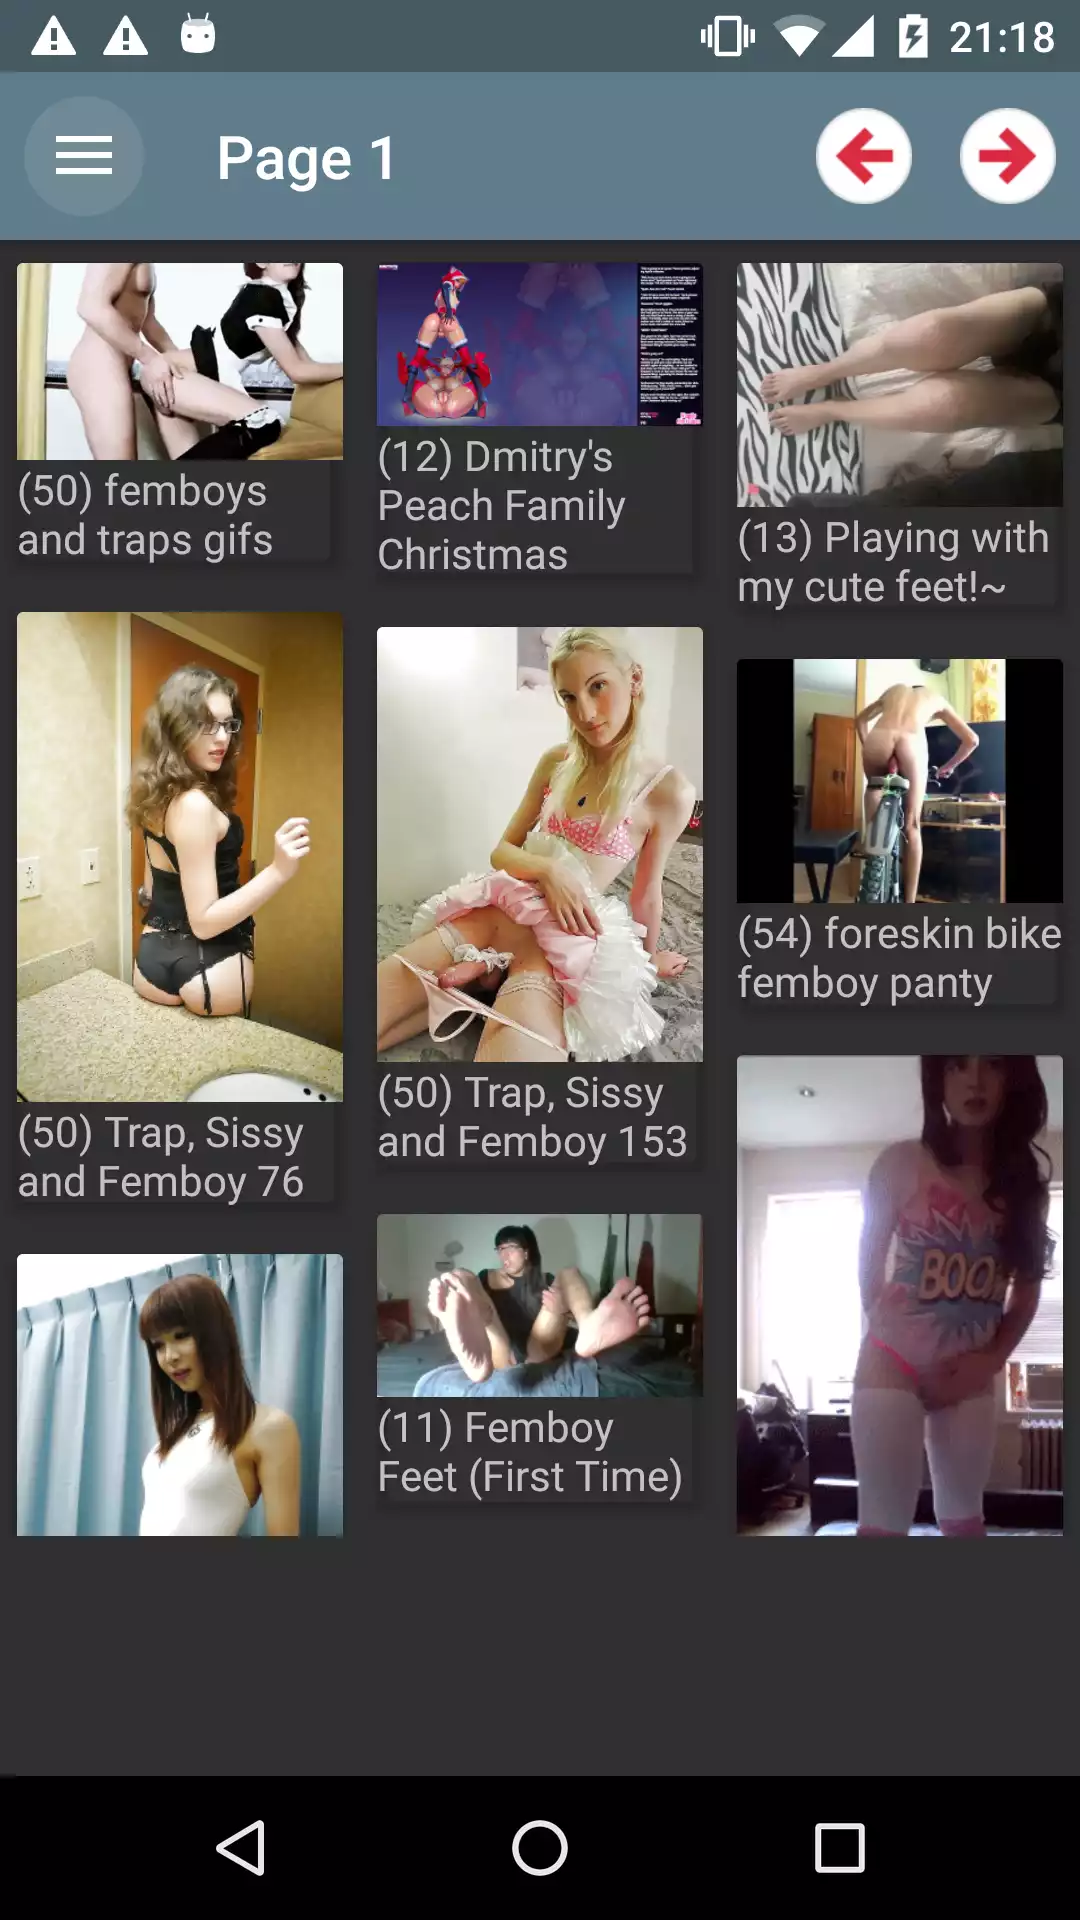 Femboy Galleries beta,porn,hentei,sissy,hentai,hot,pict,sexy,app,image,apk,pictures,pics,photos,pick,anime,apks,adult,apps,gallery,hetai